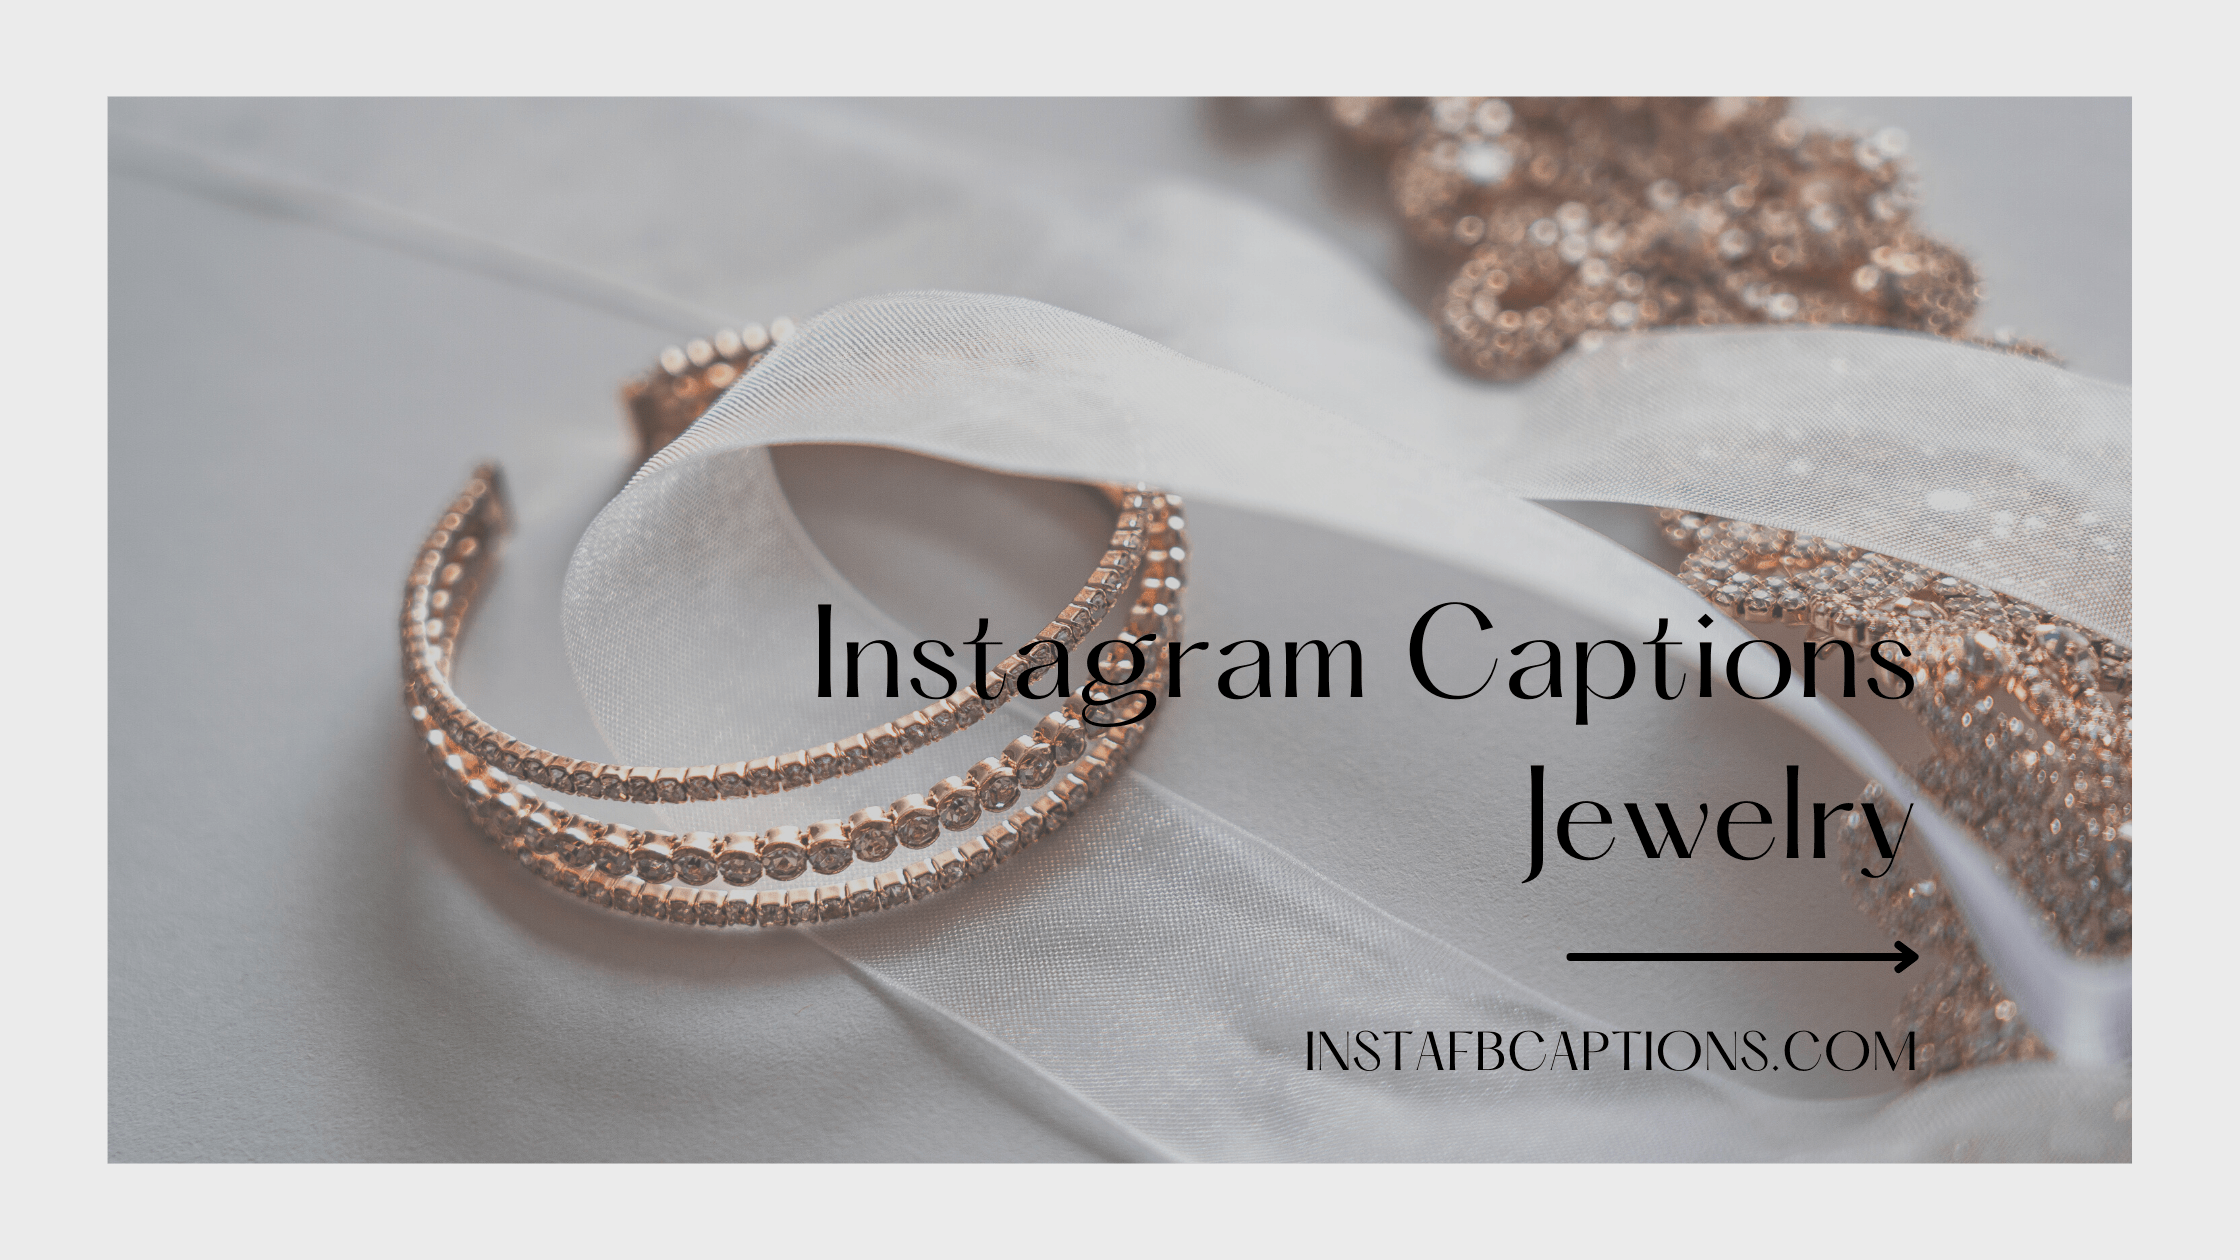 Instagram Captions Jewelry  - Instagram Captions Jewelry - [New] Jewelery Captions Quotes Bios for Instagram in 2023